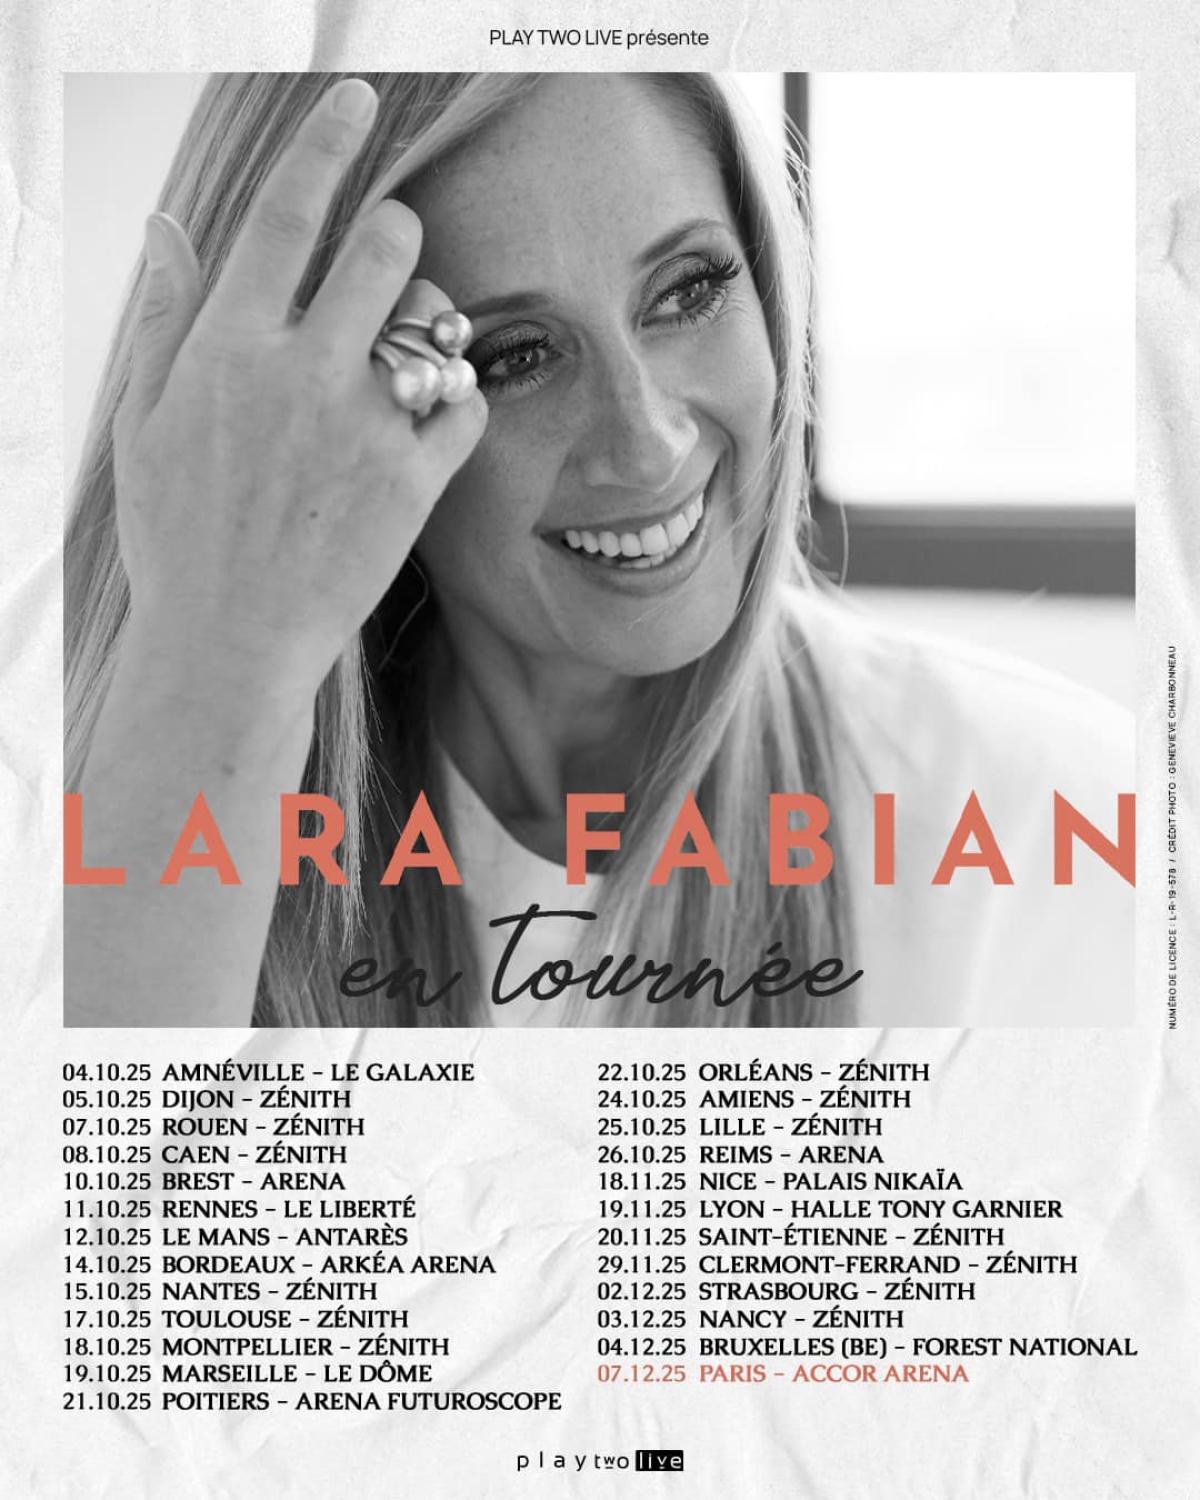 Lara Fabian at Palais Nikaia Tickets